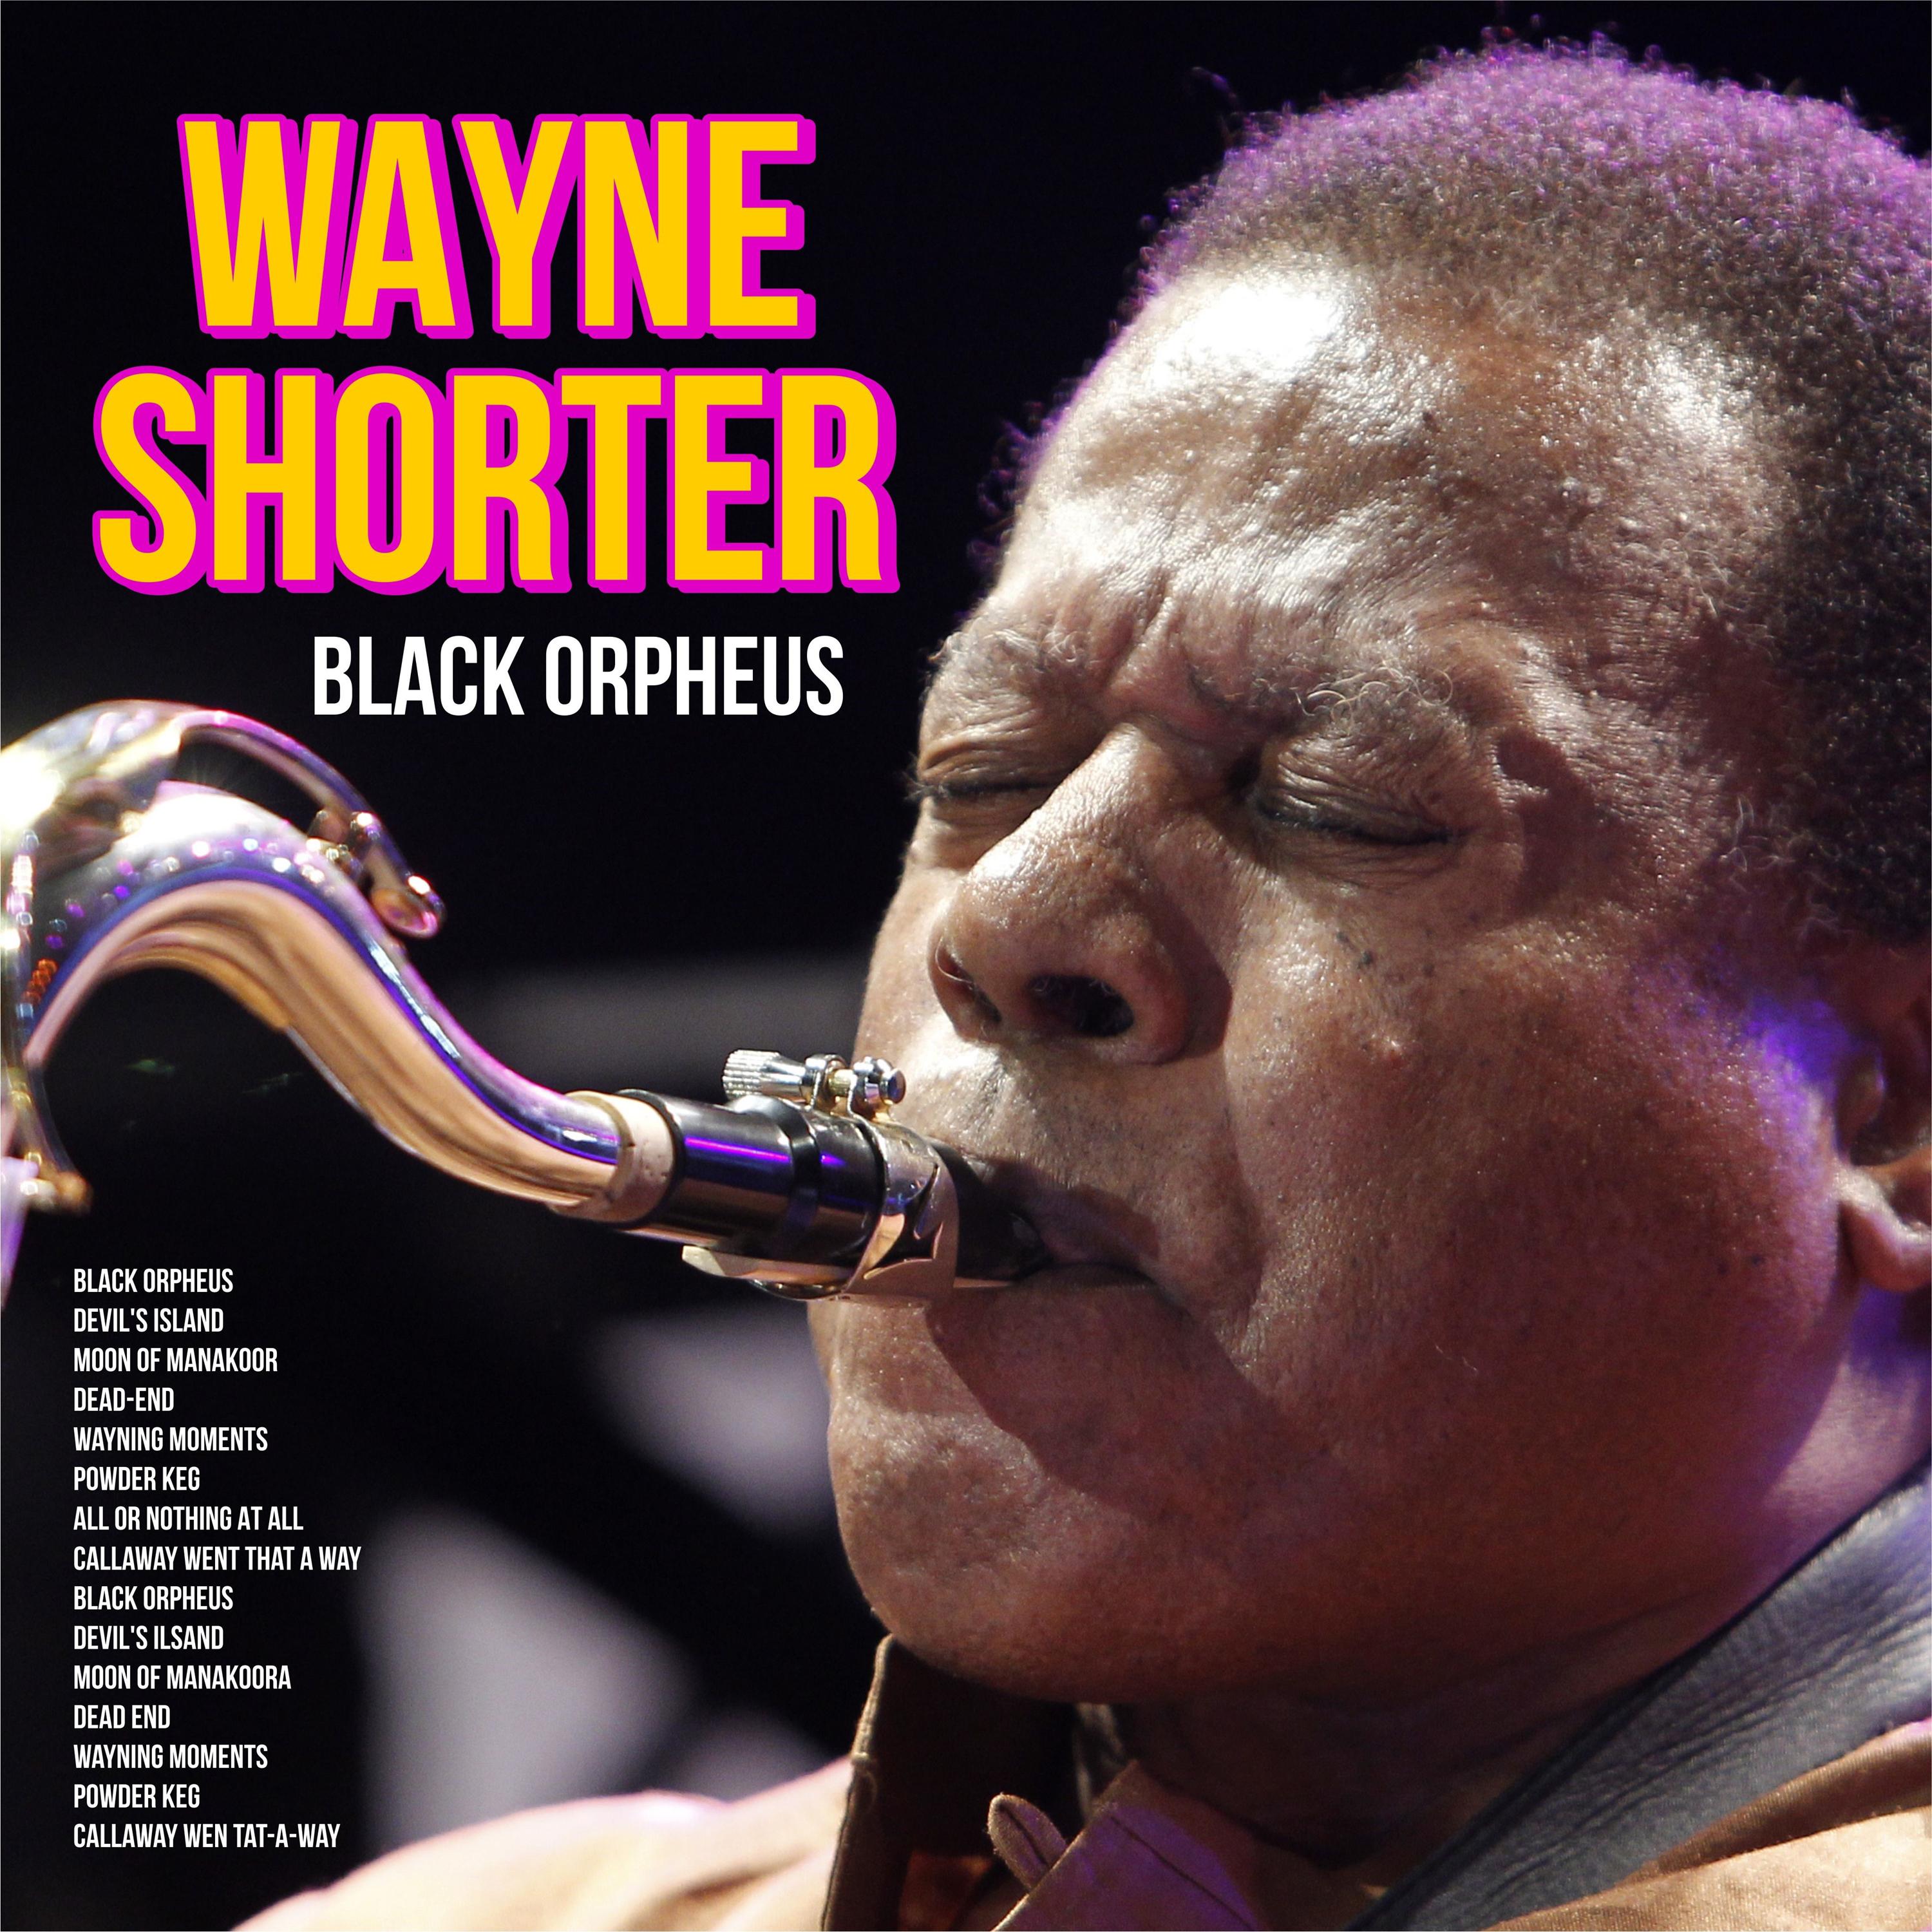 Wayne Shorter - Black Orpheus